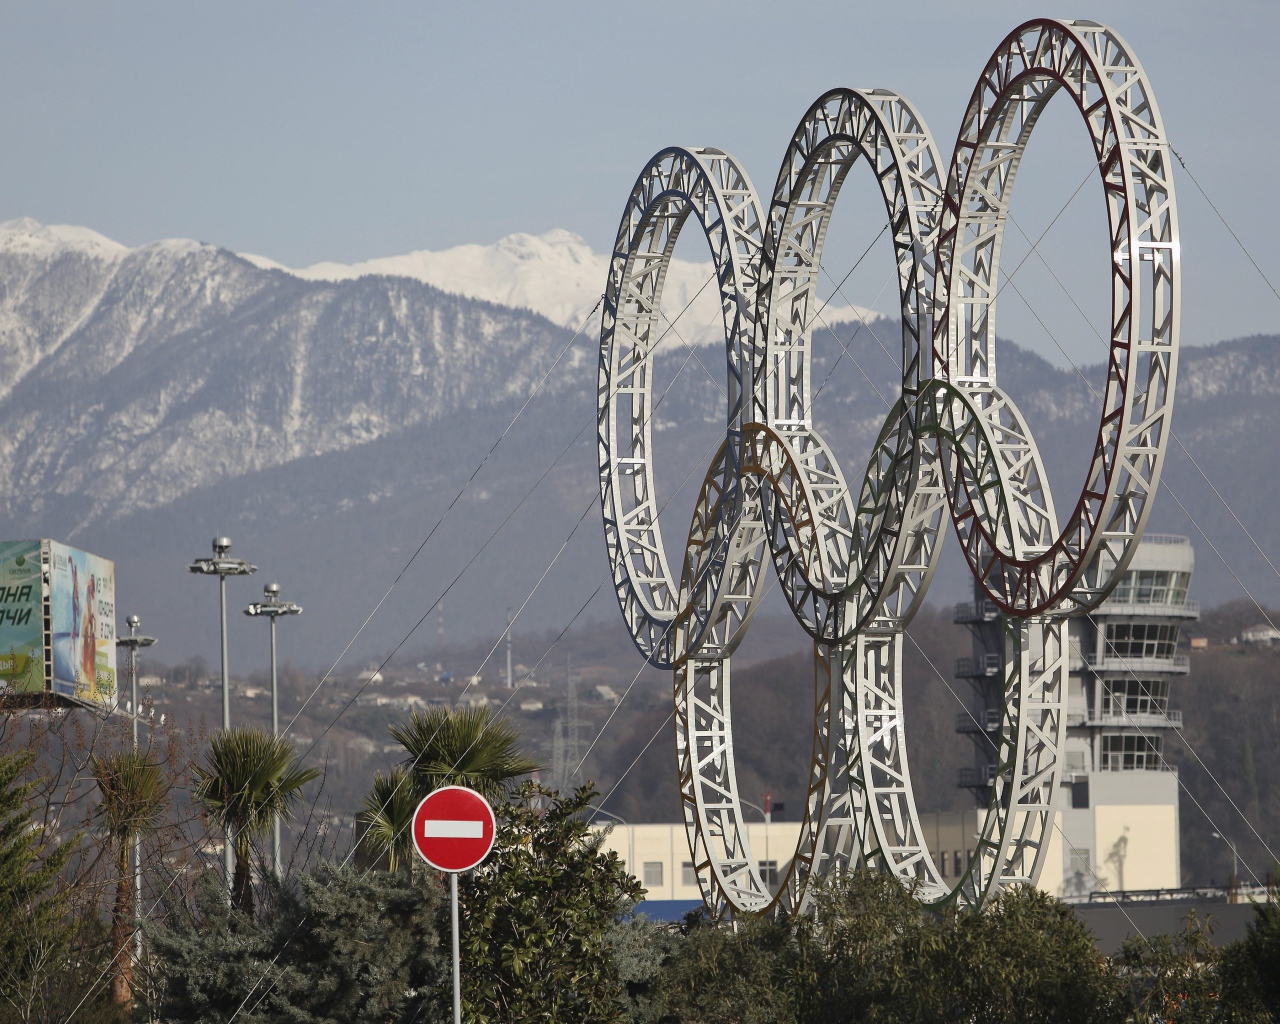 Олимпийские кольца на фоне гор в Сочи 2014